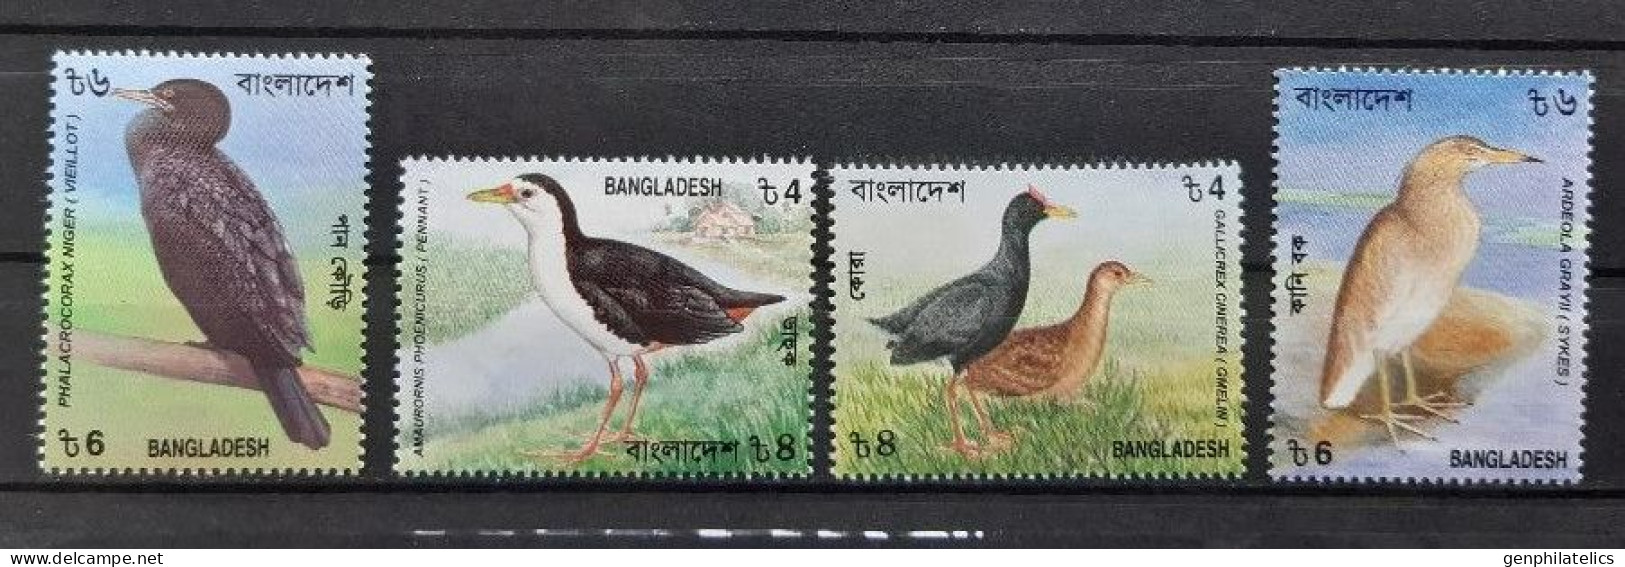 BANGLADESH 2000 FAUNA Animals BIRDS - Fine Set MNH - Bangladesh